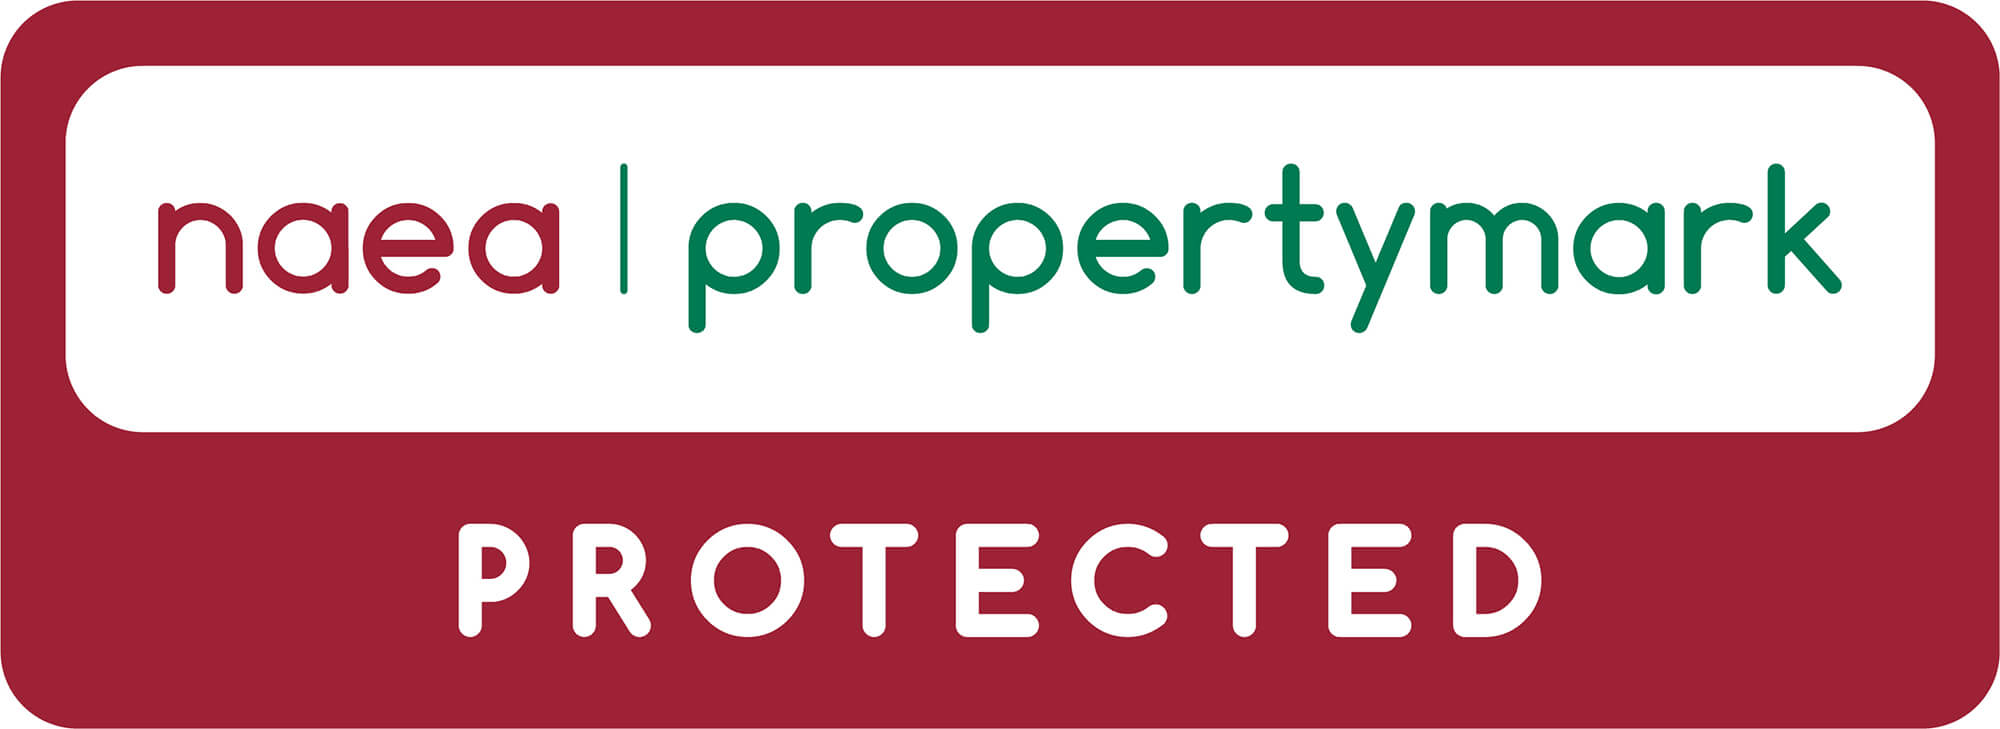 NAEA Propertymark Protected.jpg